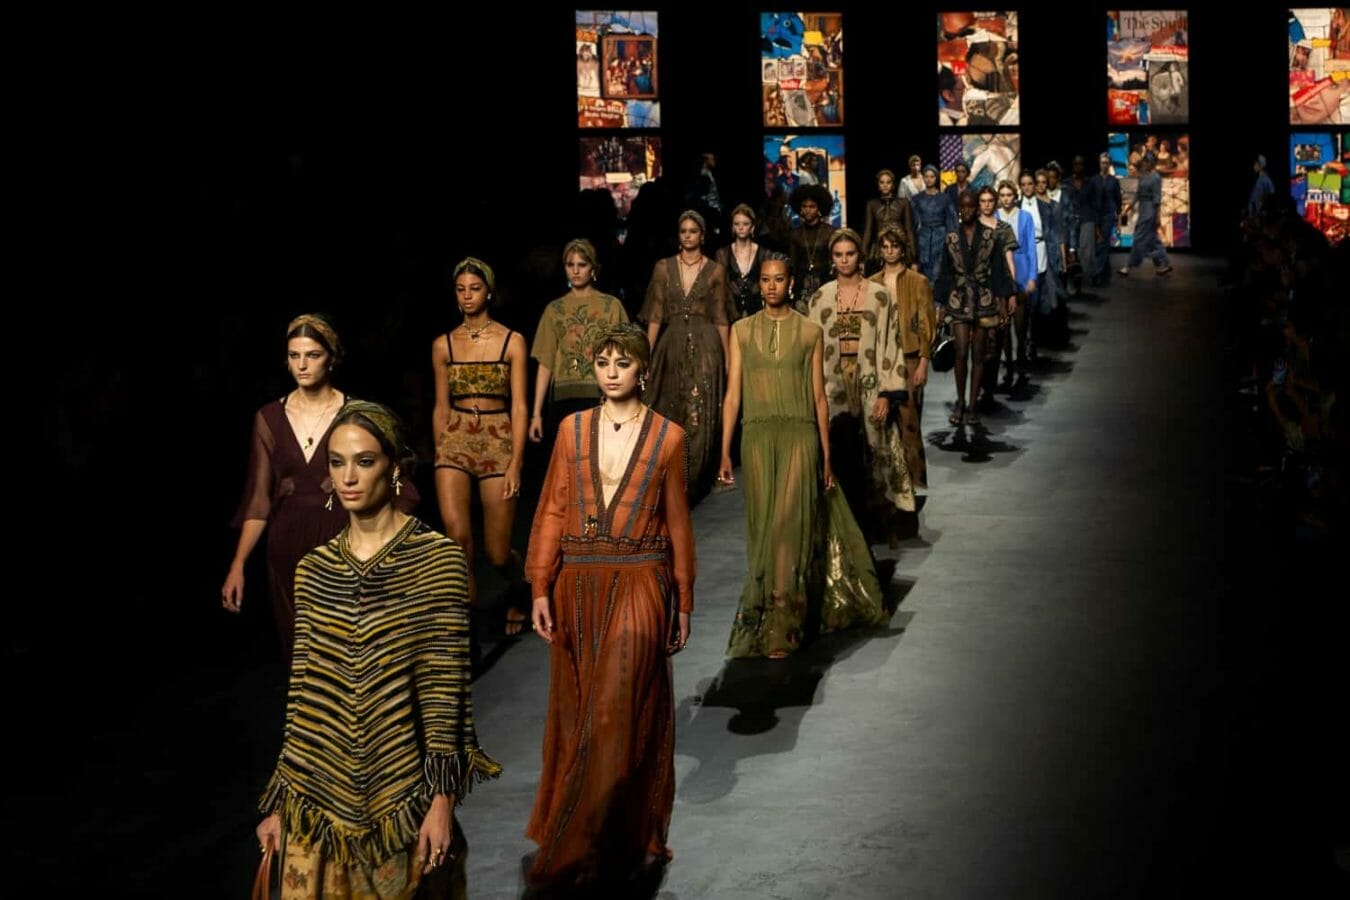 New fashion collaborations with Dior, Miu Miu, Christian Louboutin